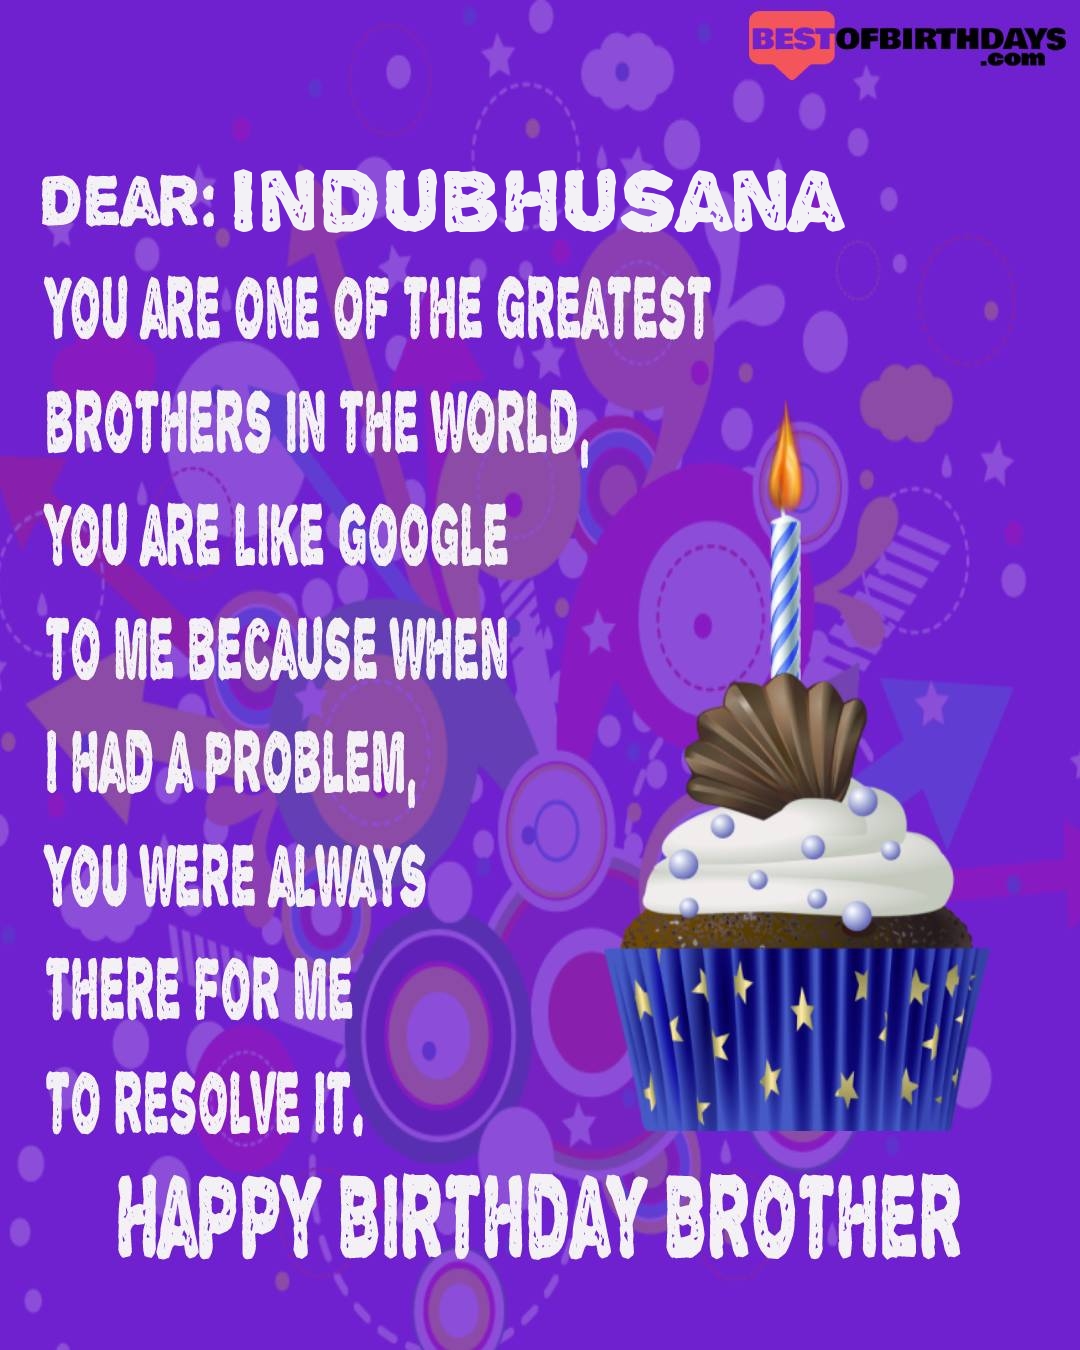 Happy birthday indubhusana bhai brother bro